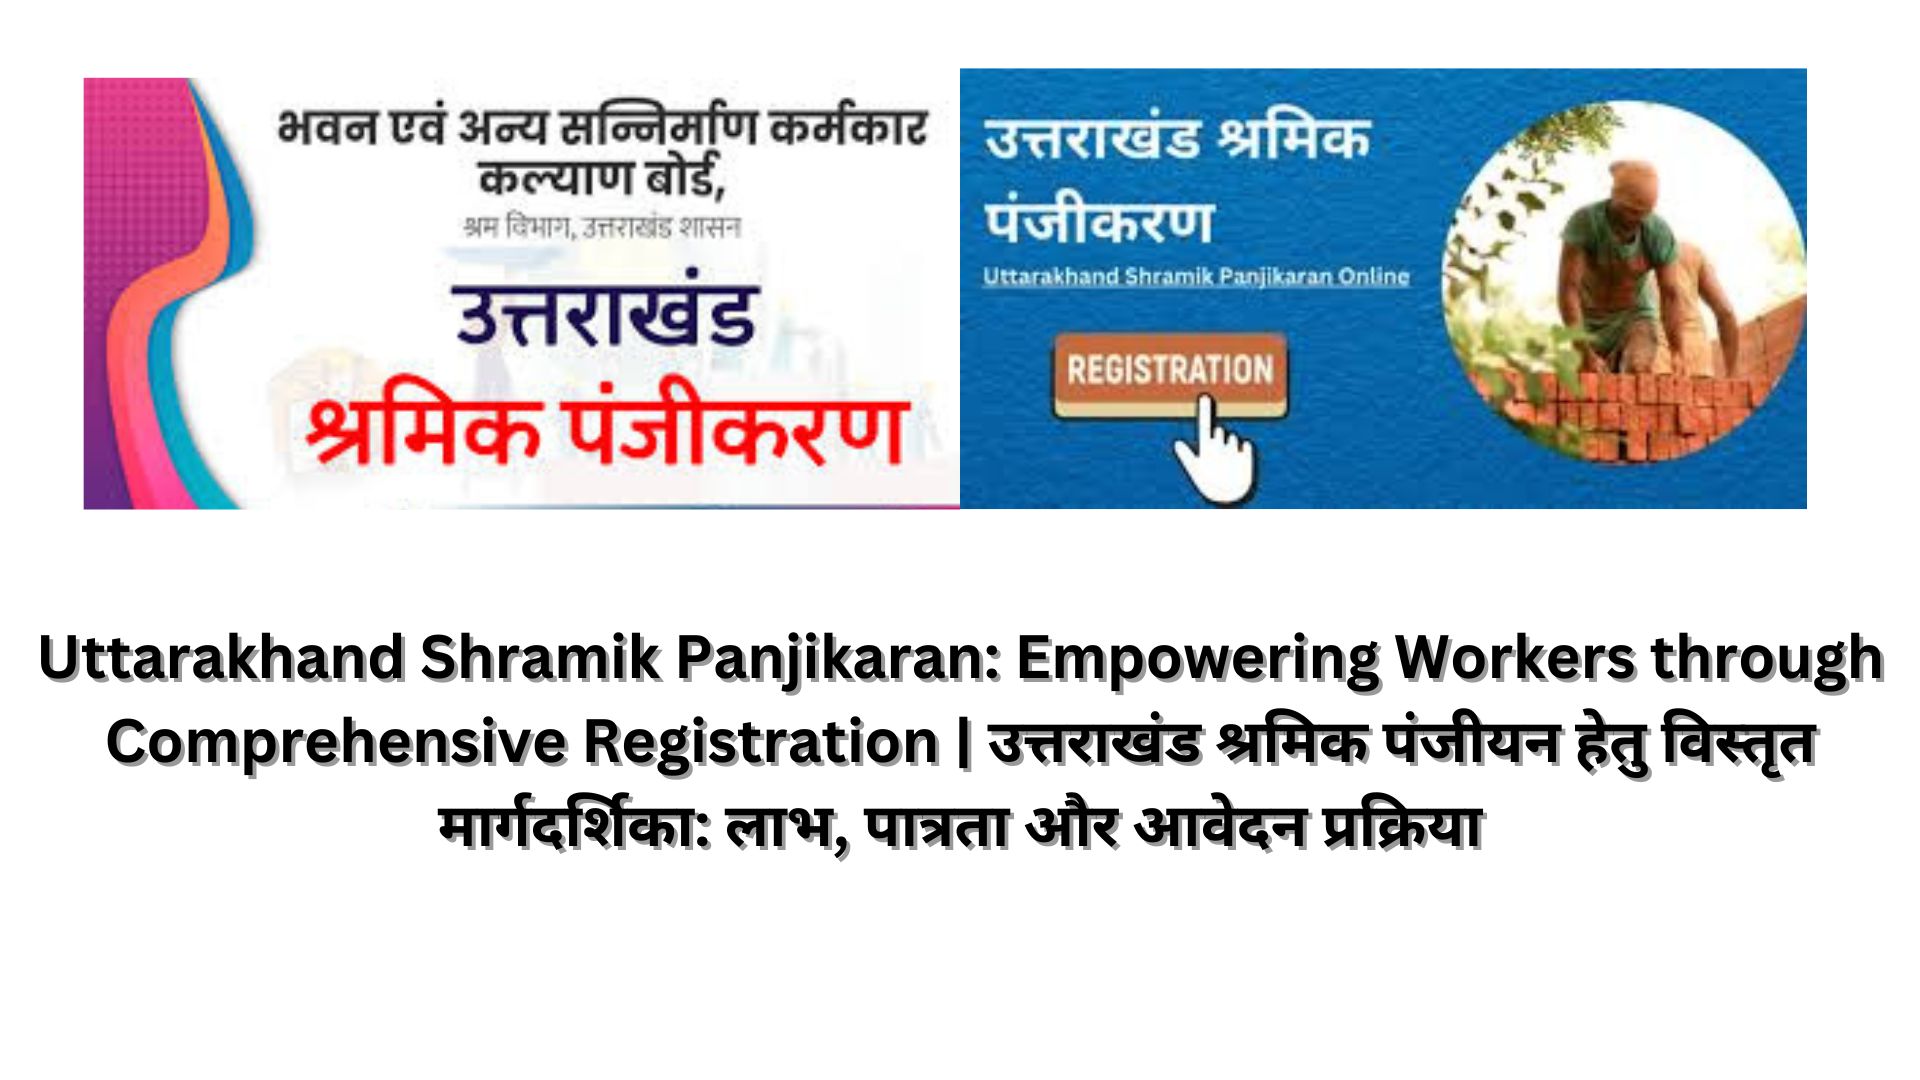 Uttarakhand Shramik Panjikaran: Empowering Workers through Comprehensive Registration | उत्तराखंड श्रमिक पंजीयन हेतु विस्तृत मार्गदर्शिका: लाभ, पात्रता और आवेदन प्रक्रिया